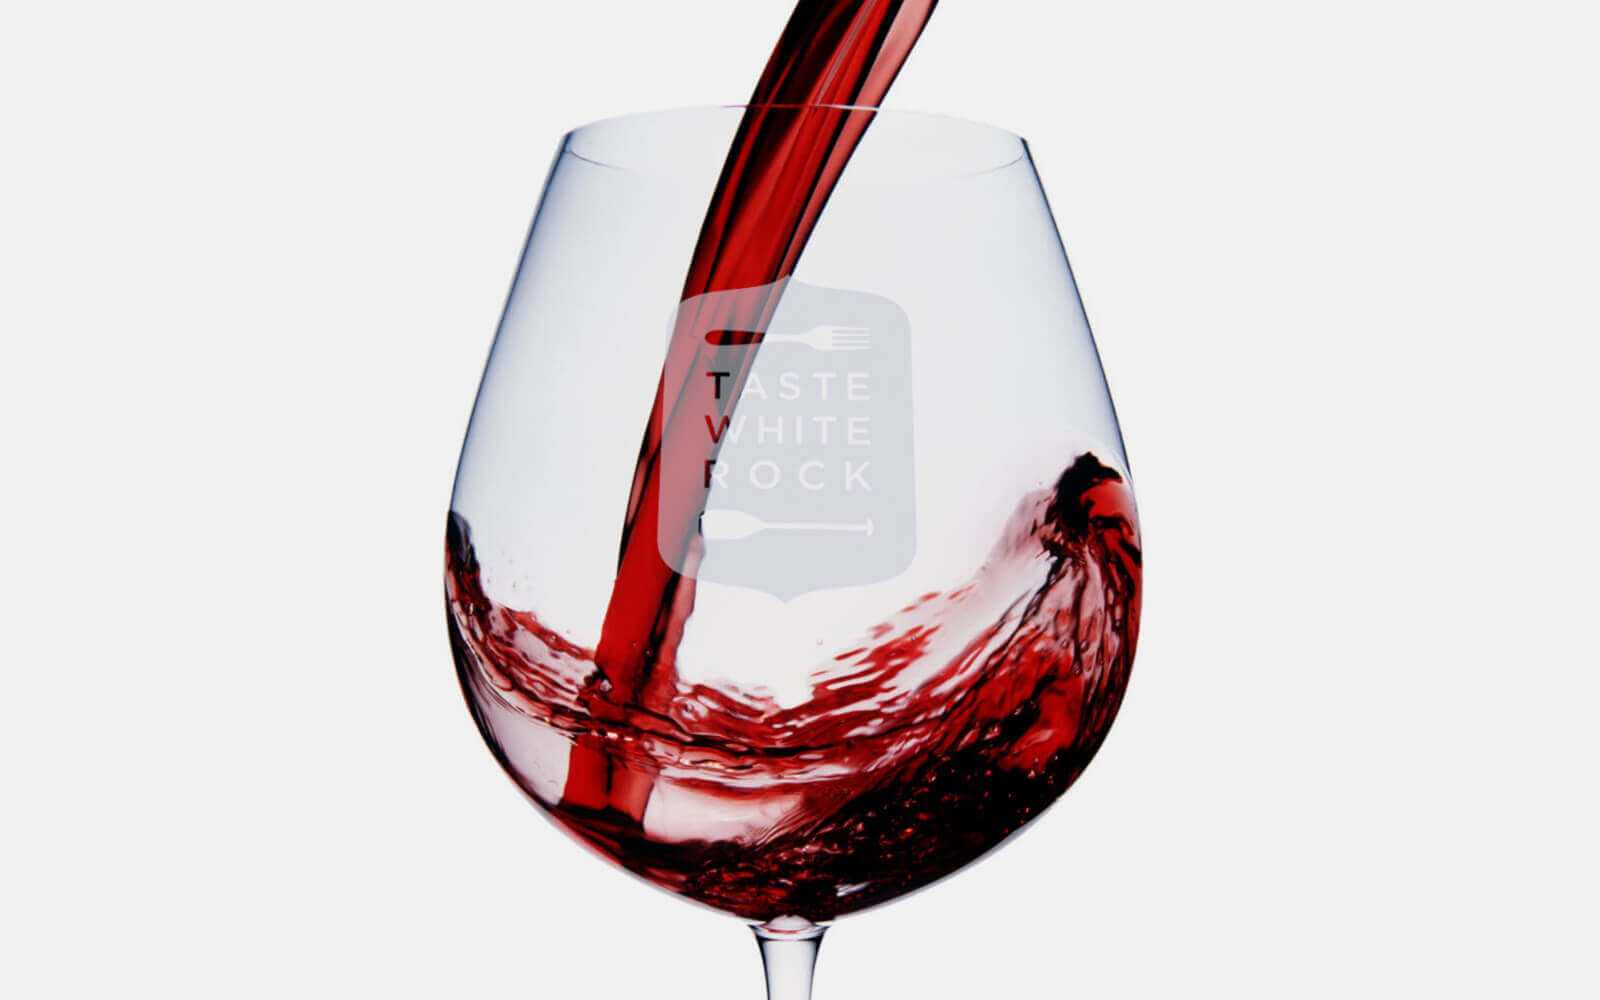 Taste White Rock Wine Glass